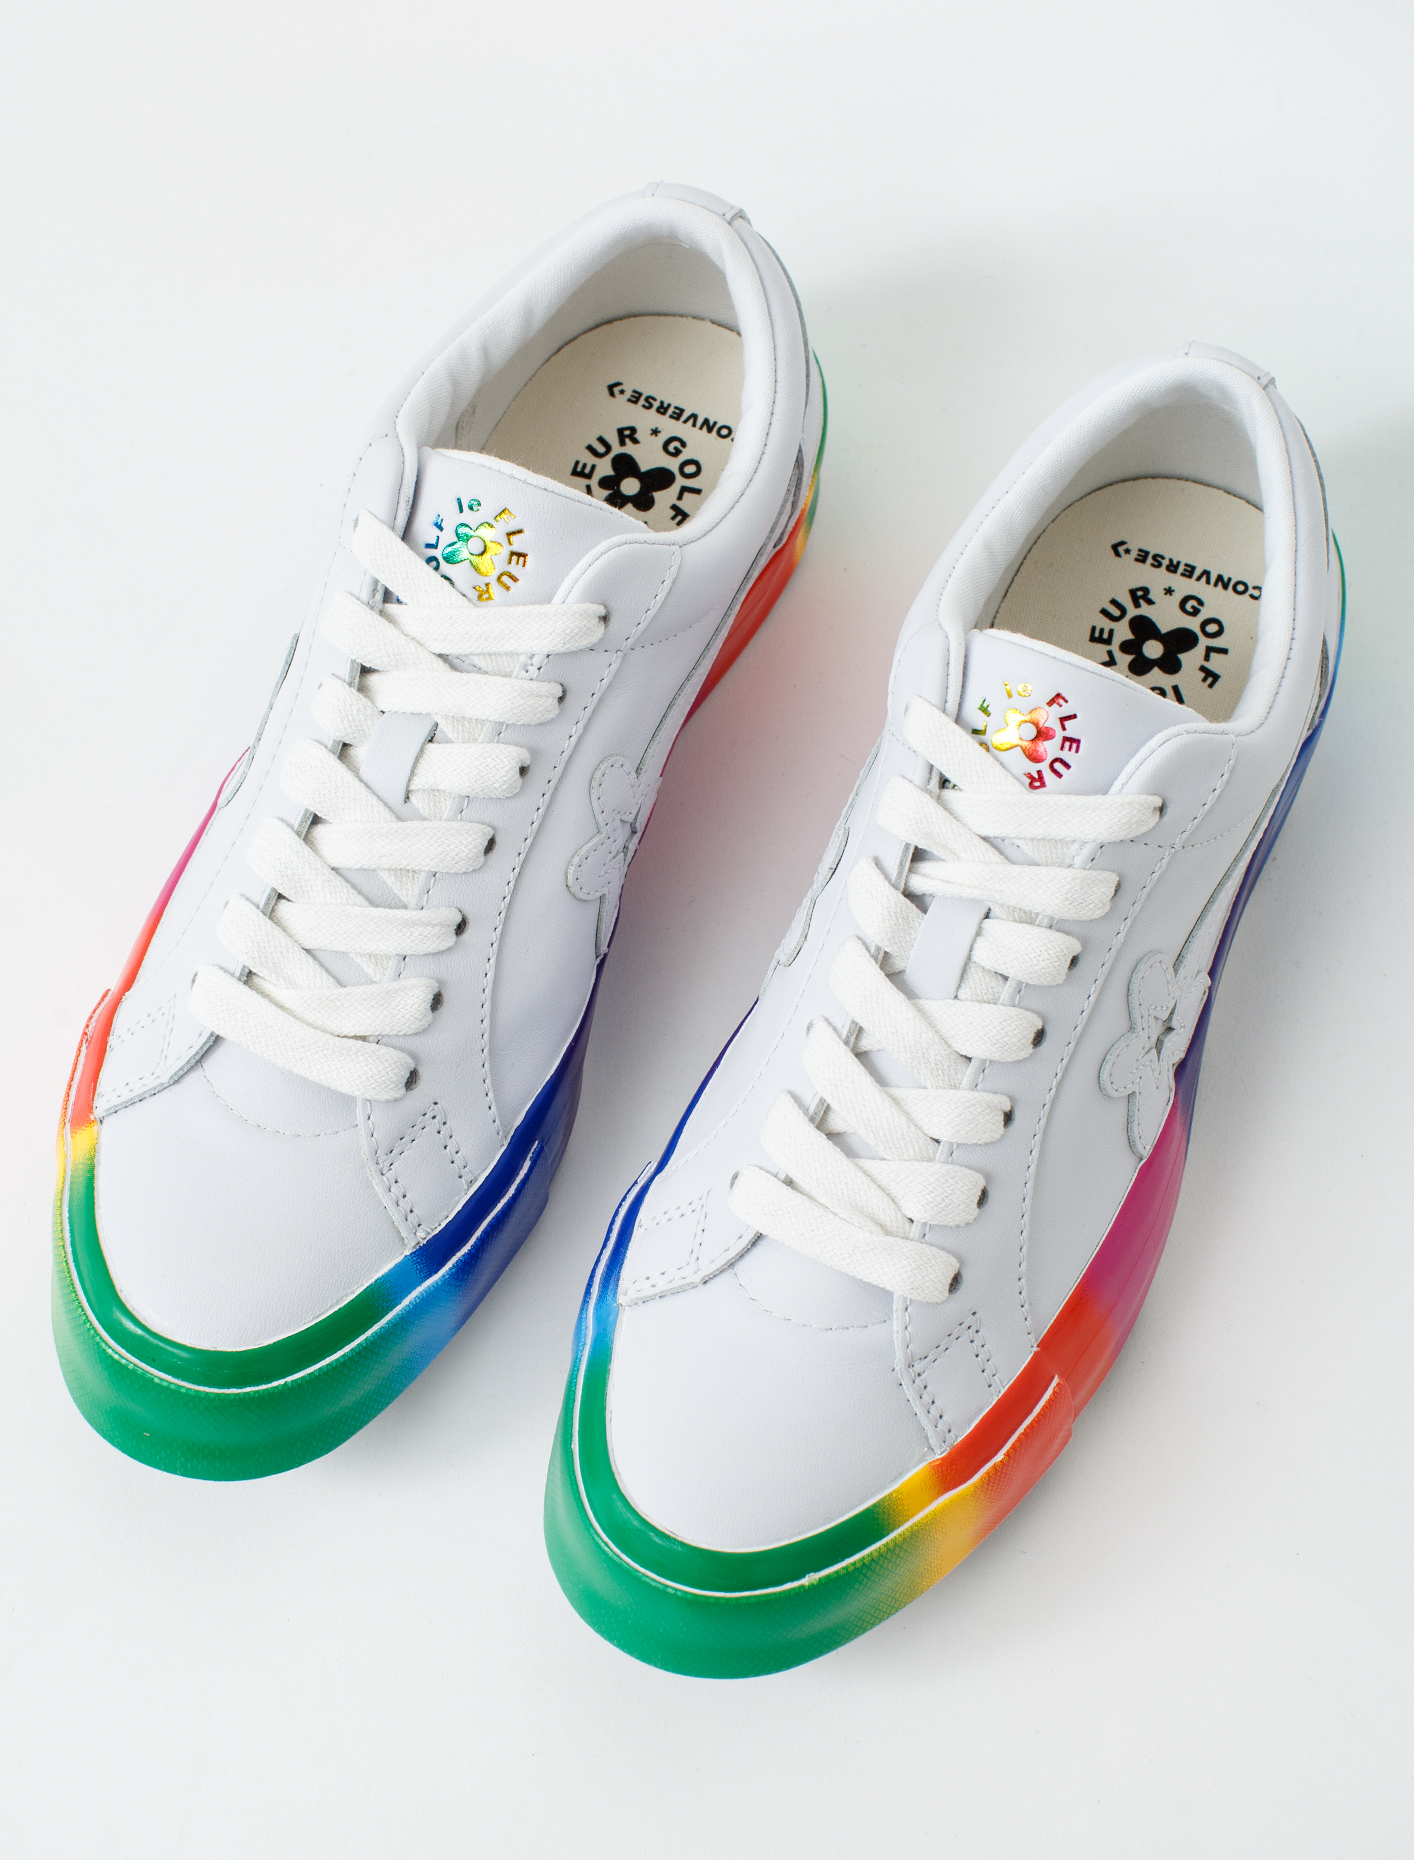 Converse x GOLF le FLEUR TTC Color Fade Sneaker | Voo Store Berlin ...